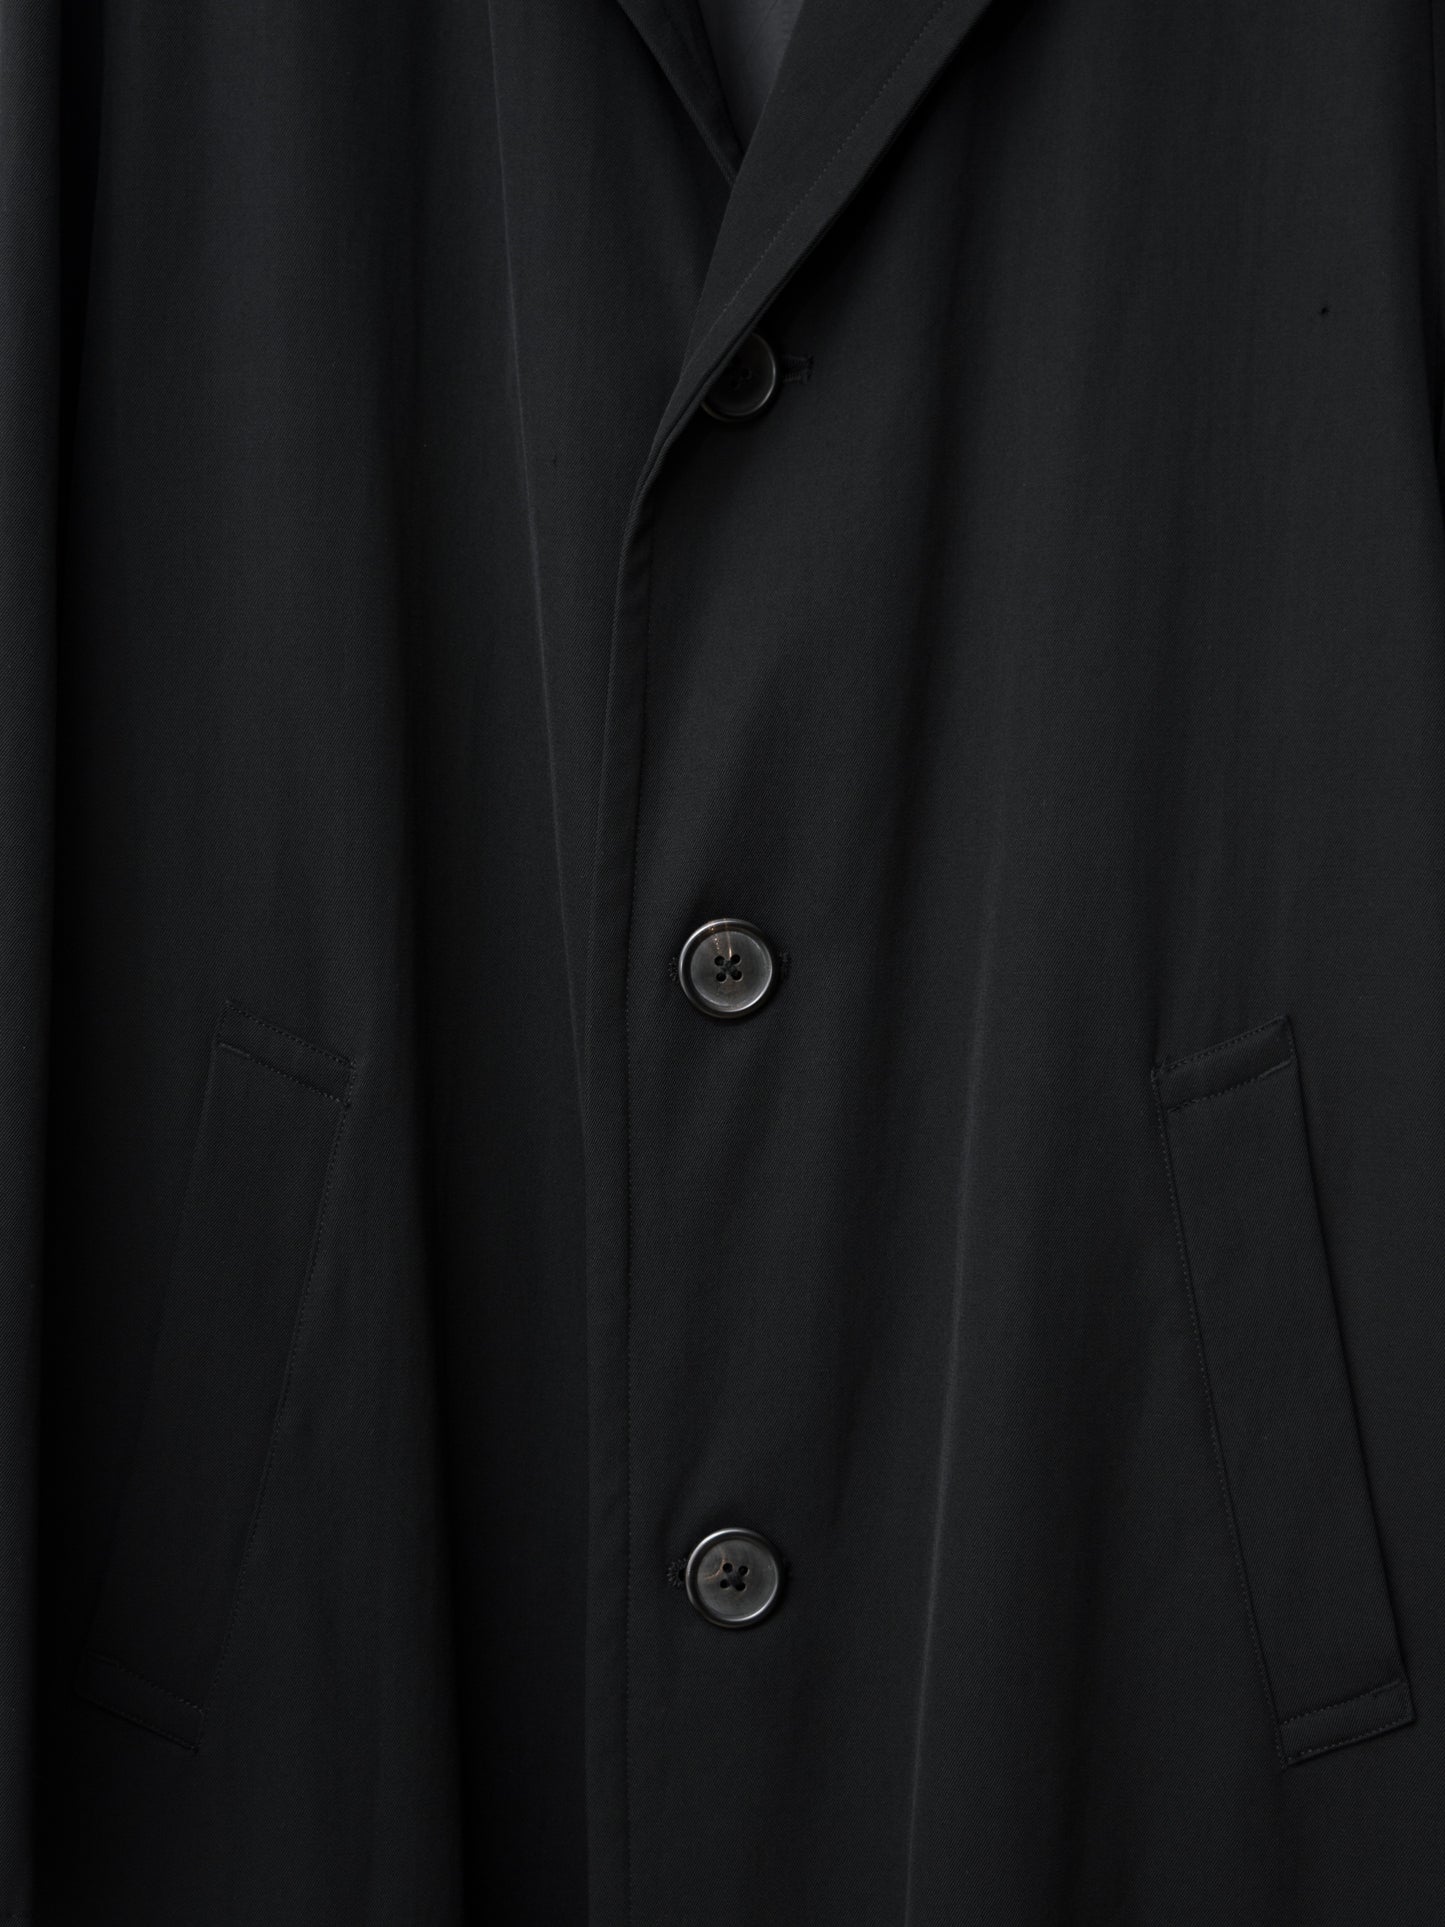 tailored coat black ∙ wool gabardine ∙ large